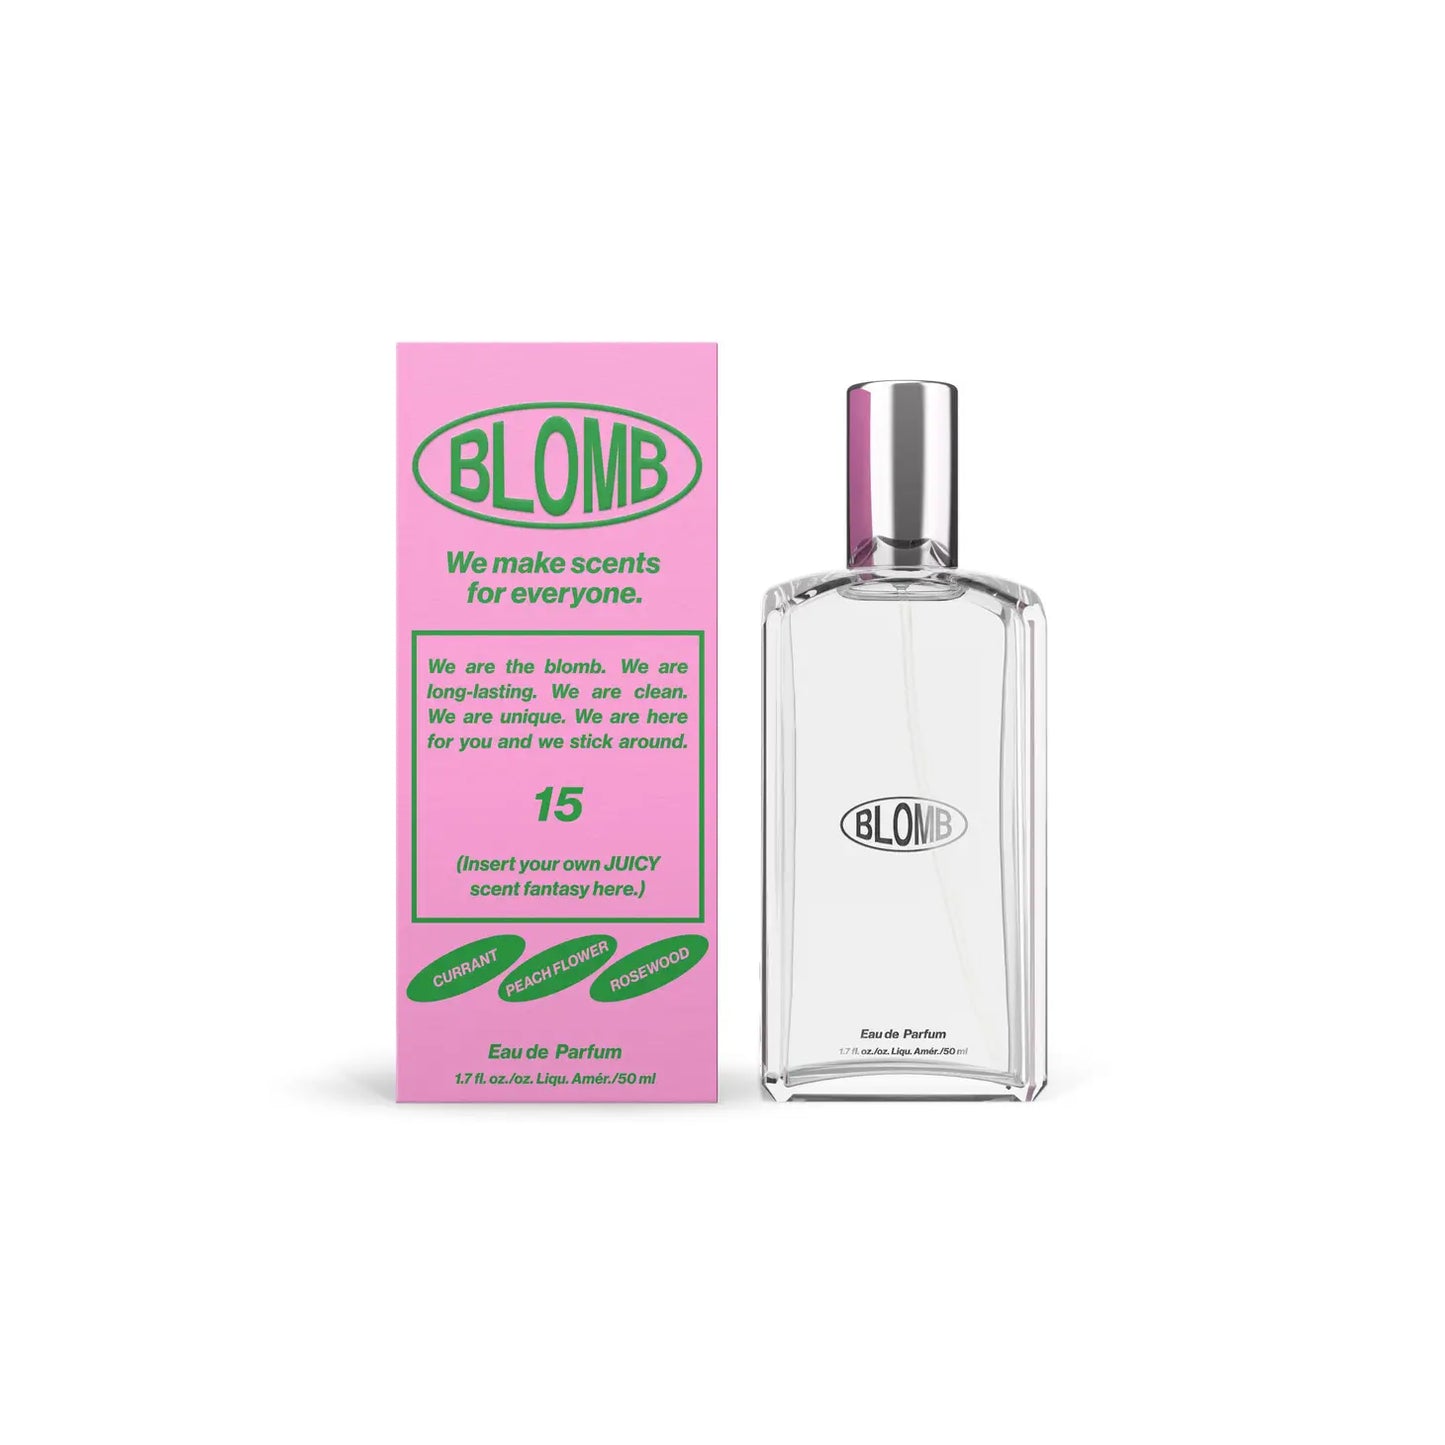 Blomb No. 15 Eau de Parfum